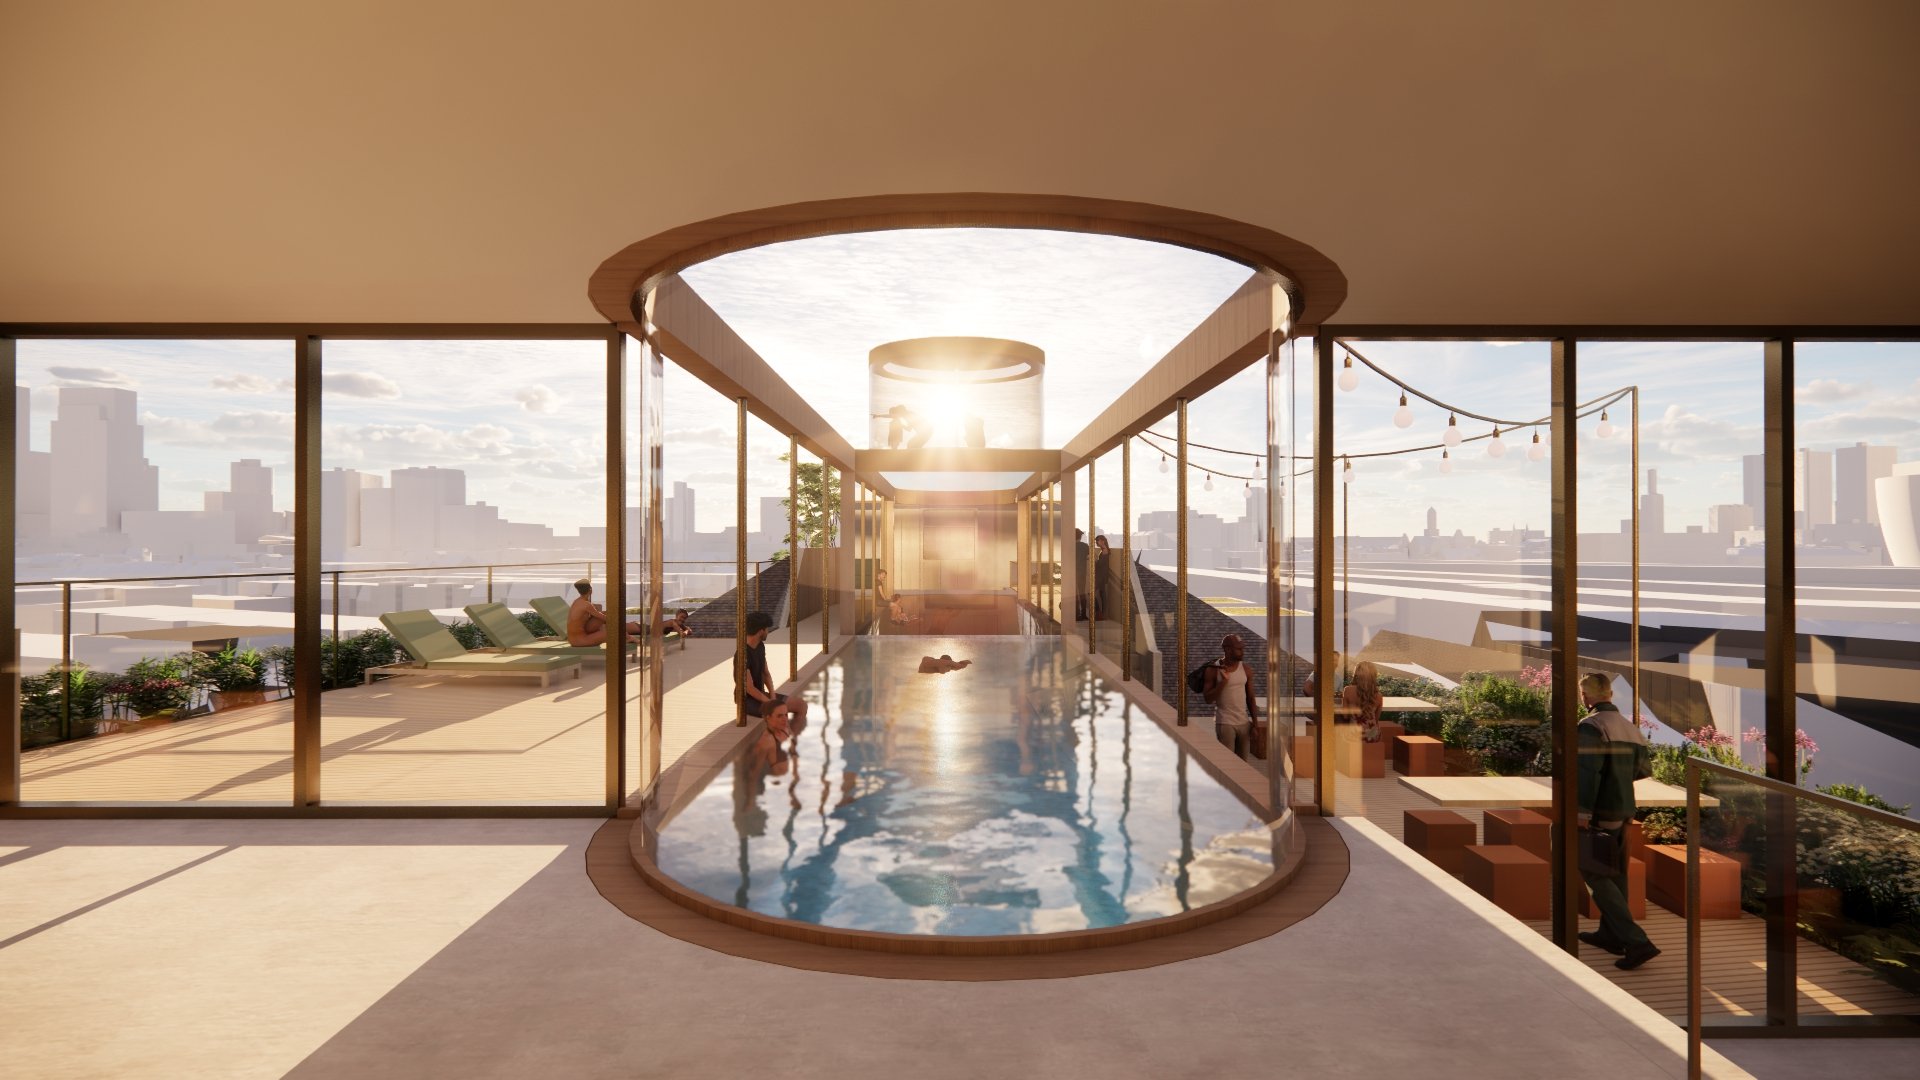   A SPECTACULAR SKYLINE   Rotterdam’s first luxury ‘6 star’ hotel 